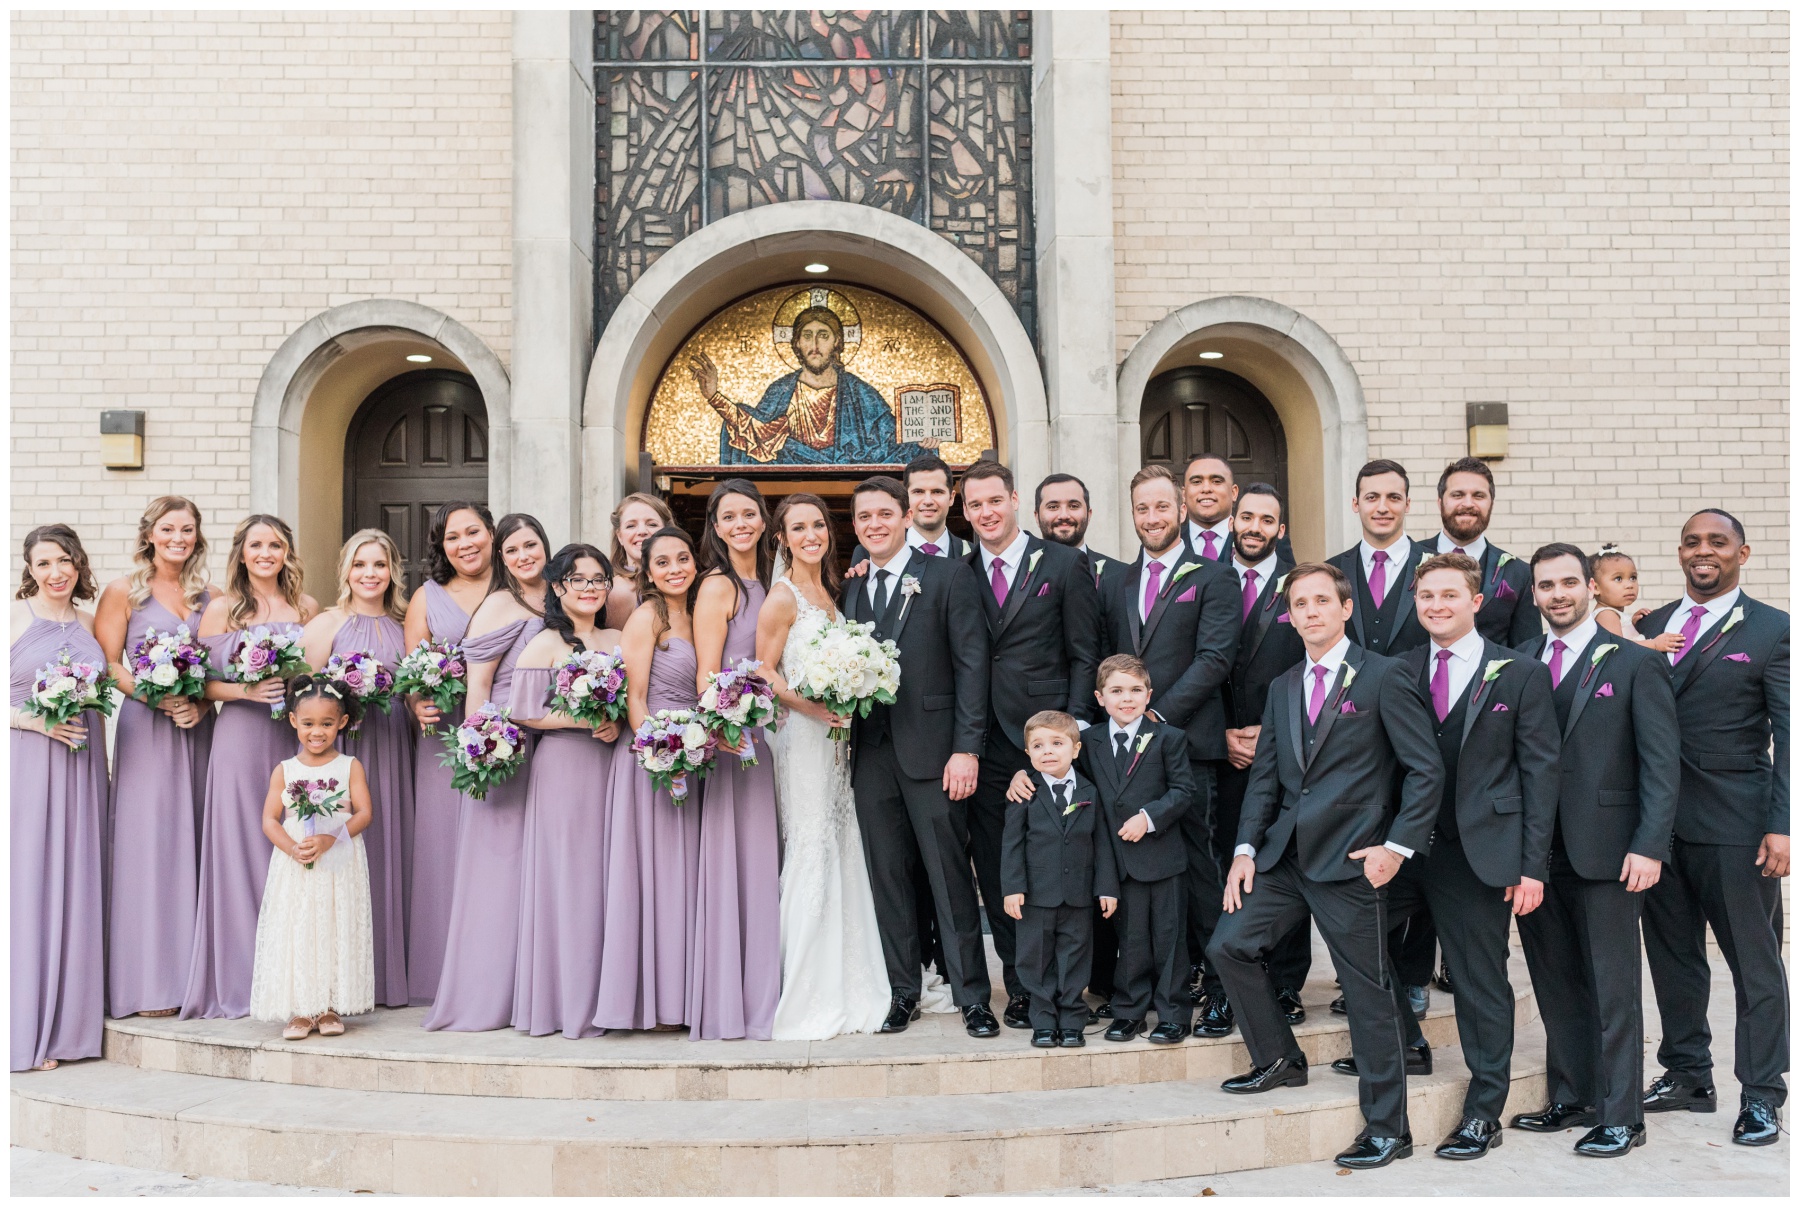 Bridesmaids in dusty lavender chiffon dresses